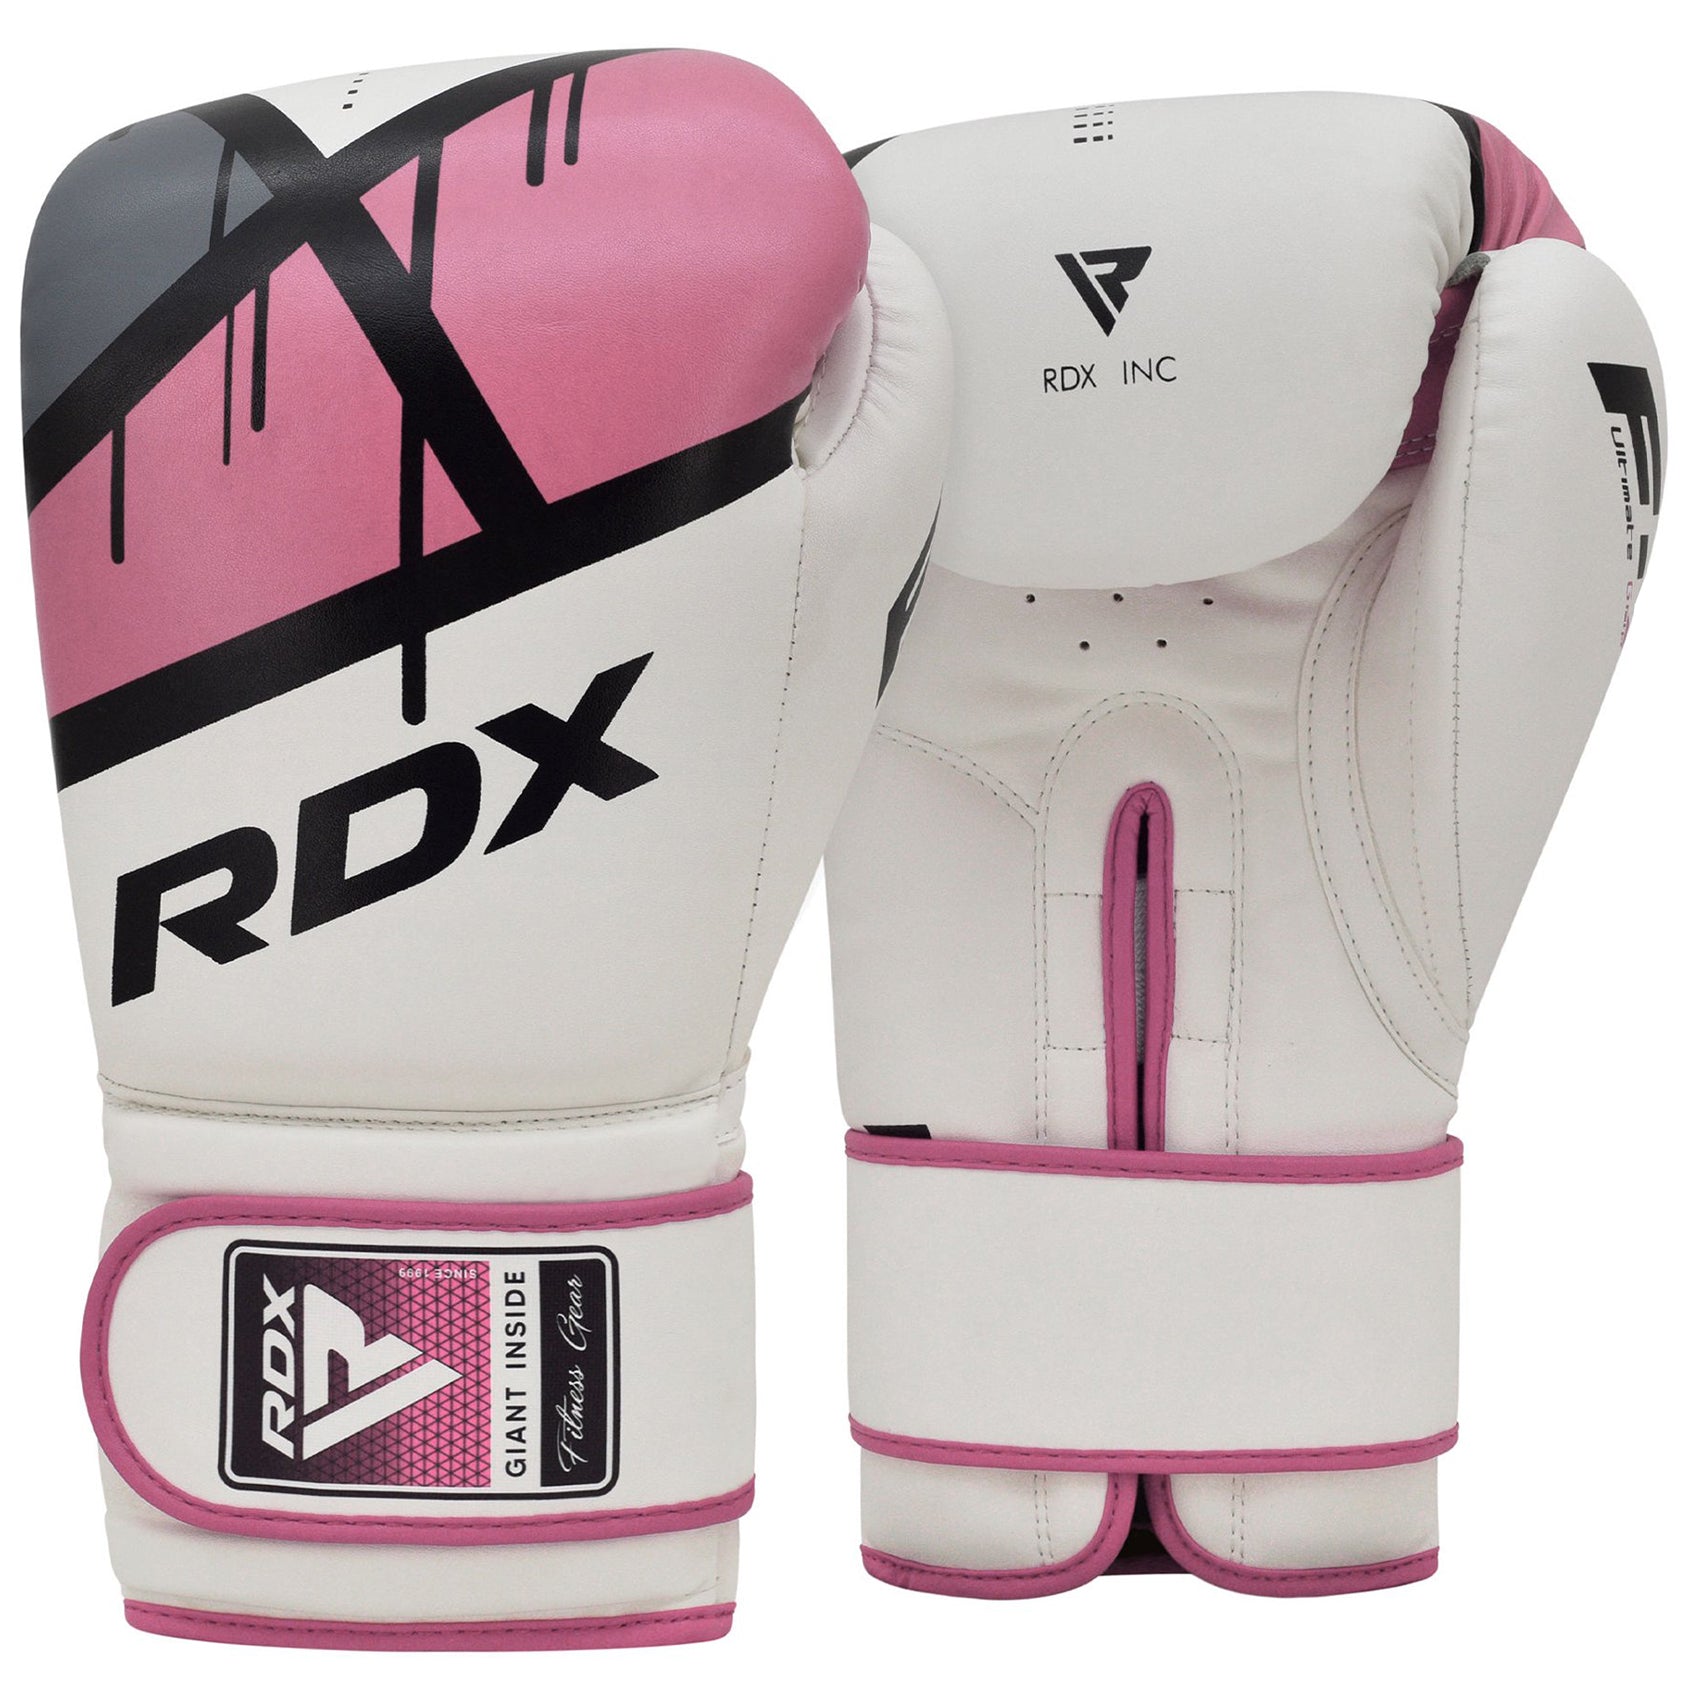 RDX F7 EGO MMA, BJJ, Muay Thai, Kickboxing, Training Boxing Gloves - PINK - 12oz - Pro-Distributing